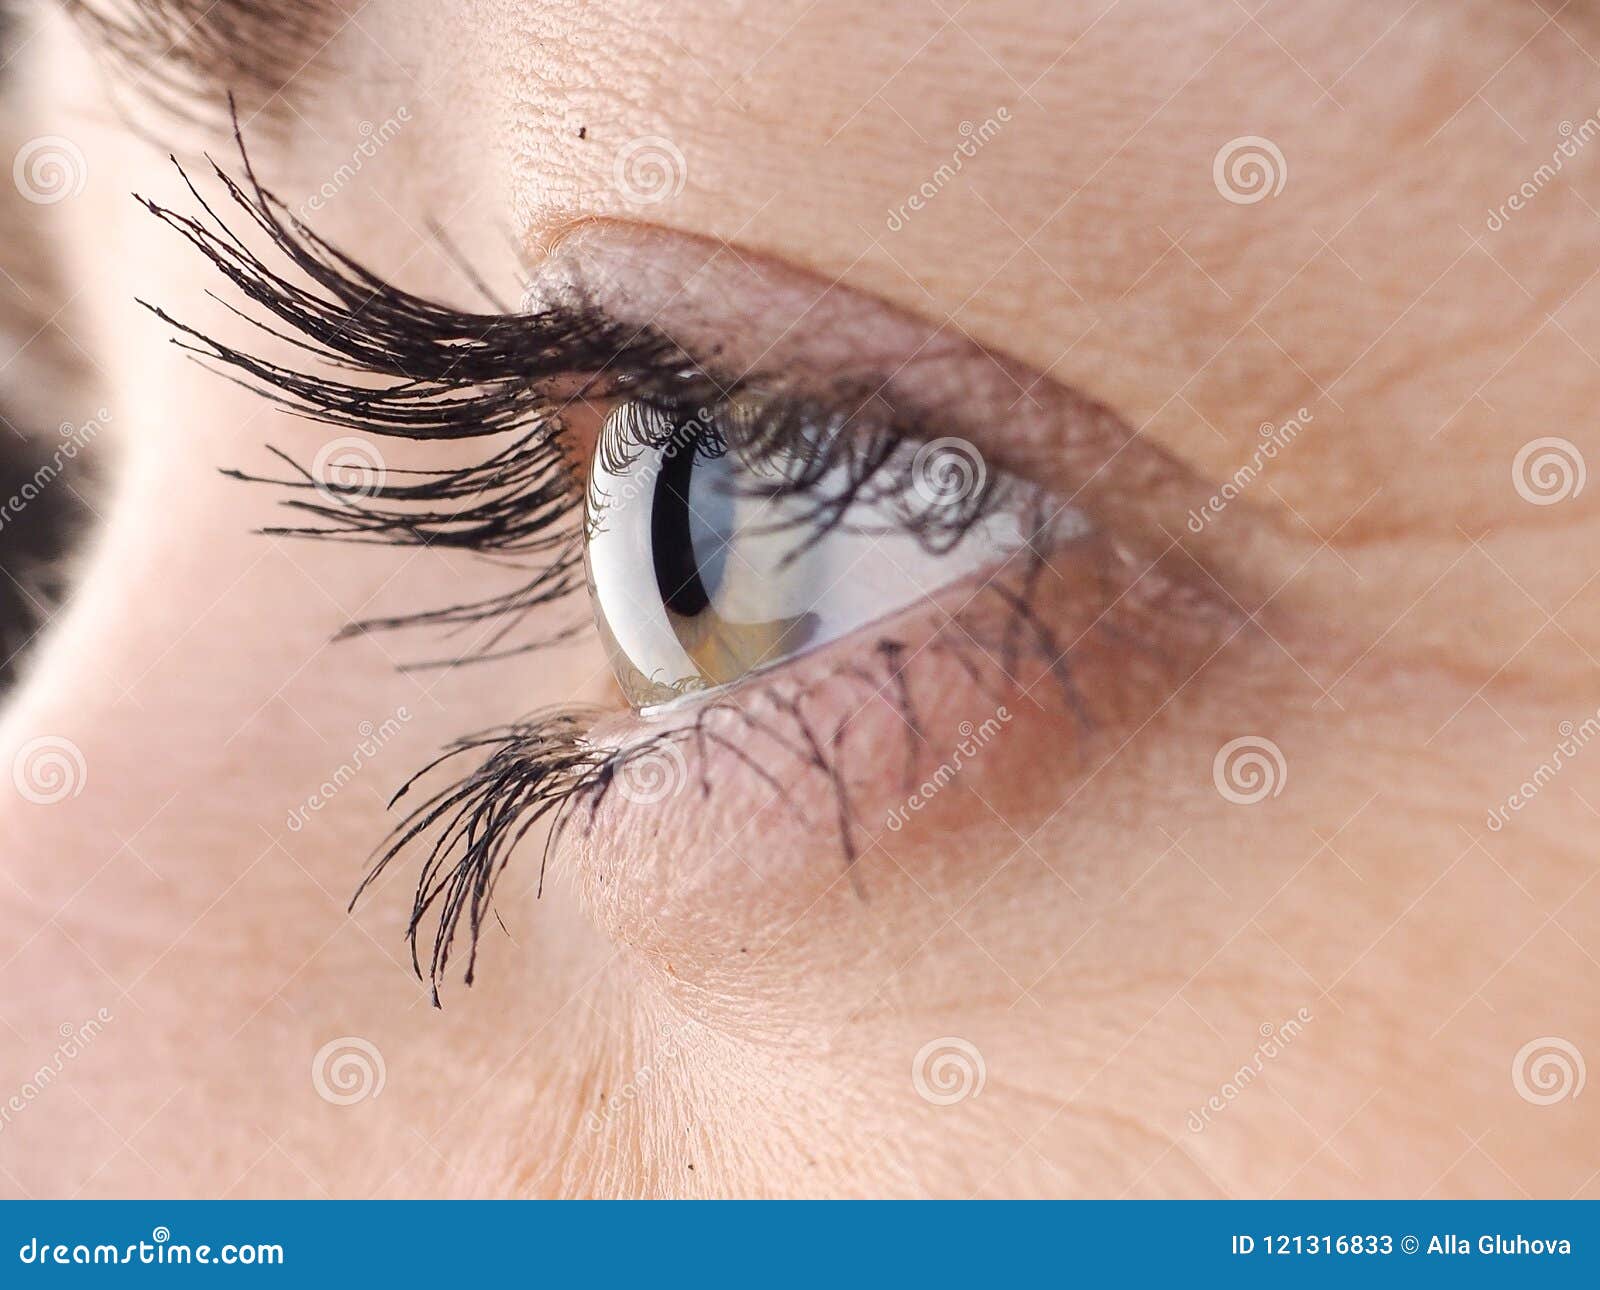 Close Up Of Eye The Human Eye Sideways Girl S Eyes With Big